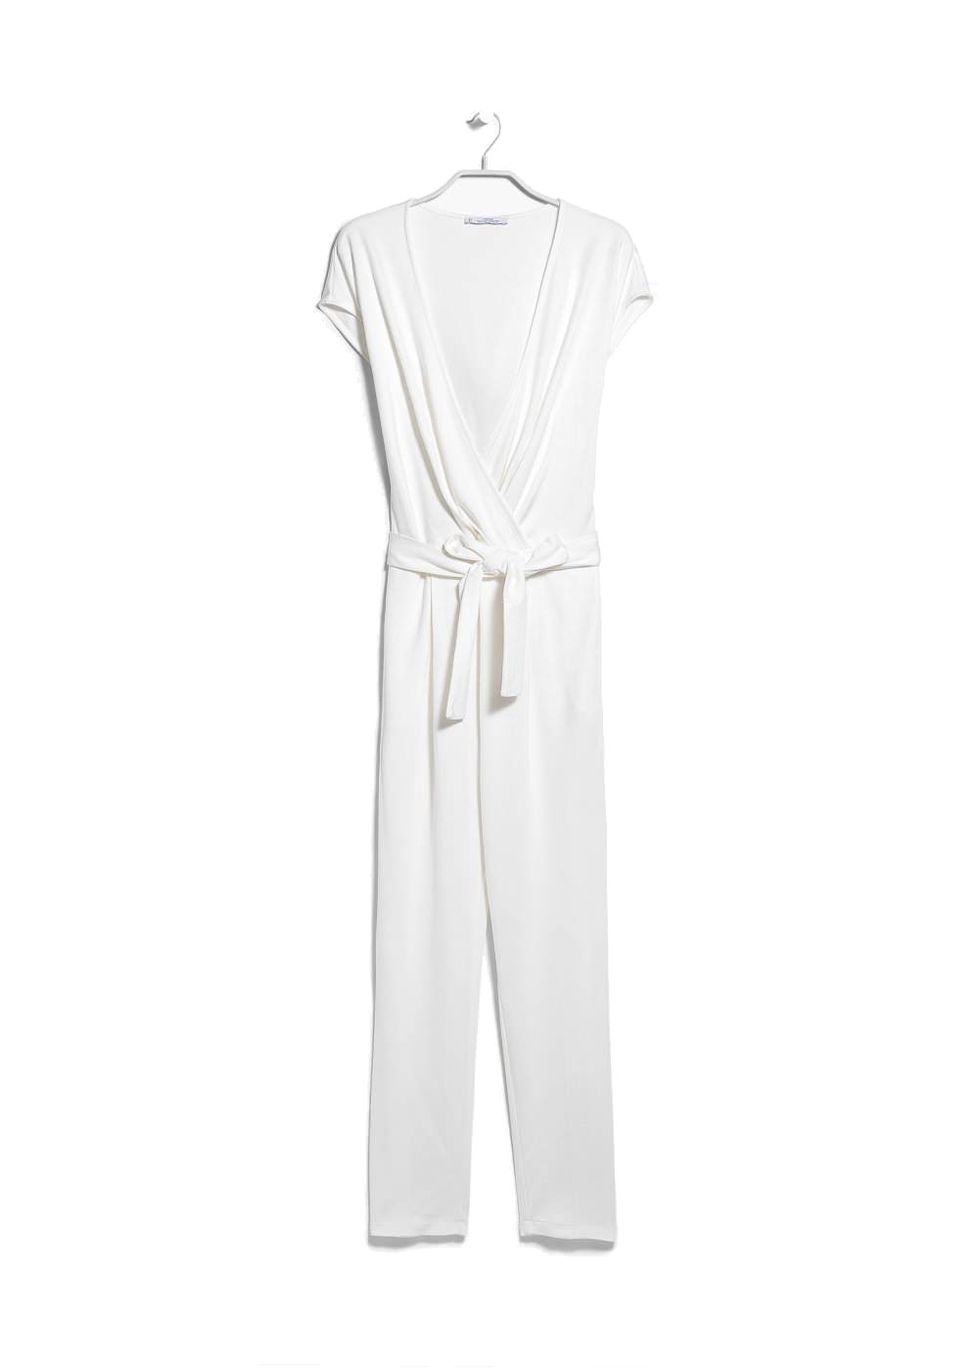 Sleeve, White, One-piece garment, Collar, Dress, Day dress, Ivory, Fashion design, Clothes hanger, Pattern, 